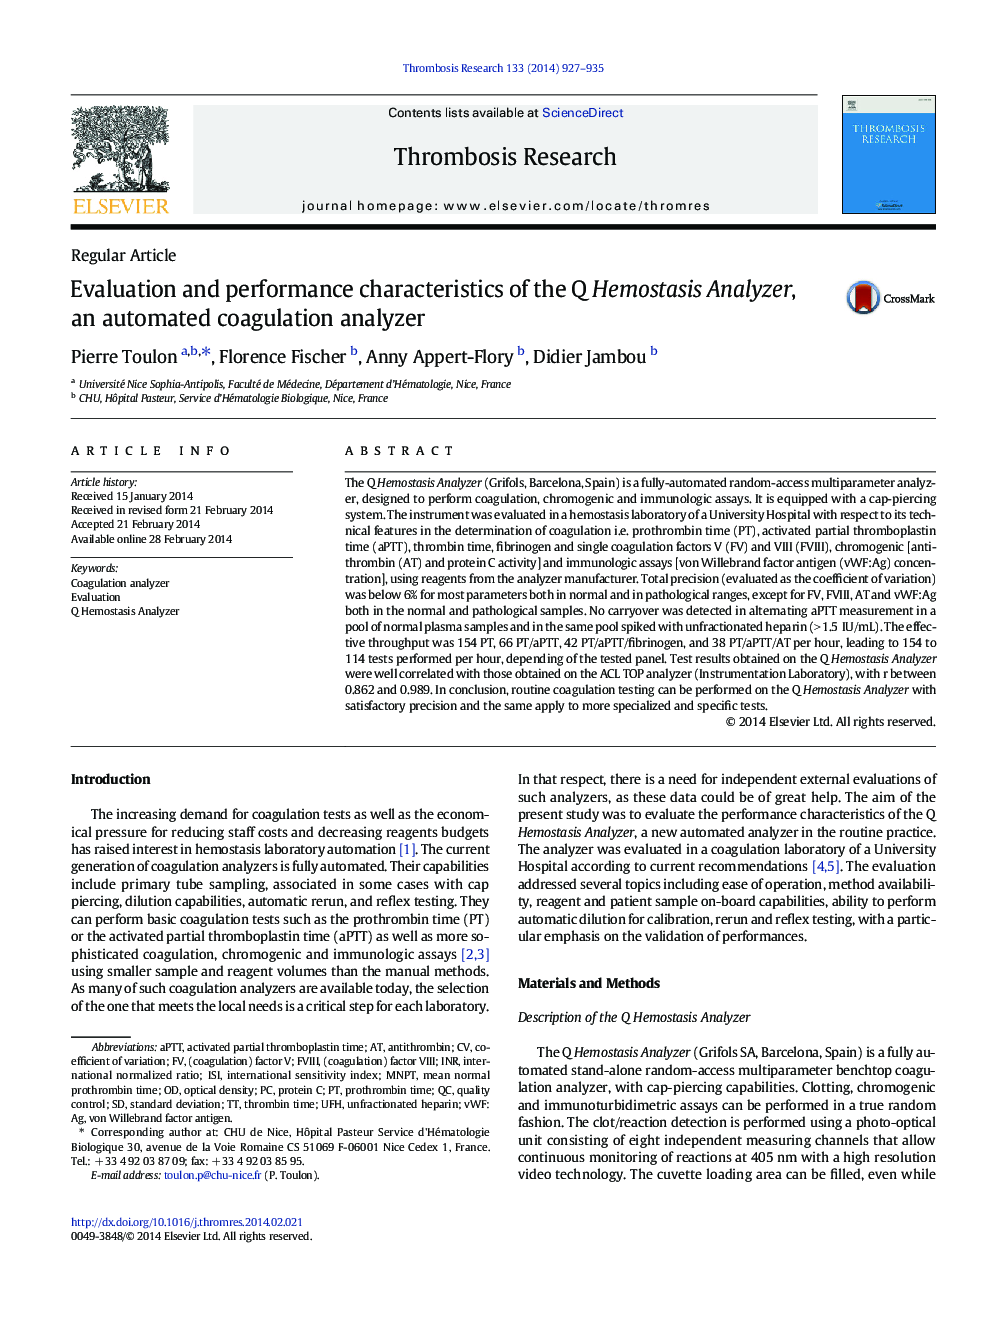 Evaluation and performance characteristics of the Q Hemostasis Analyzer, an automated coagulation analyzer